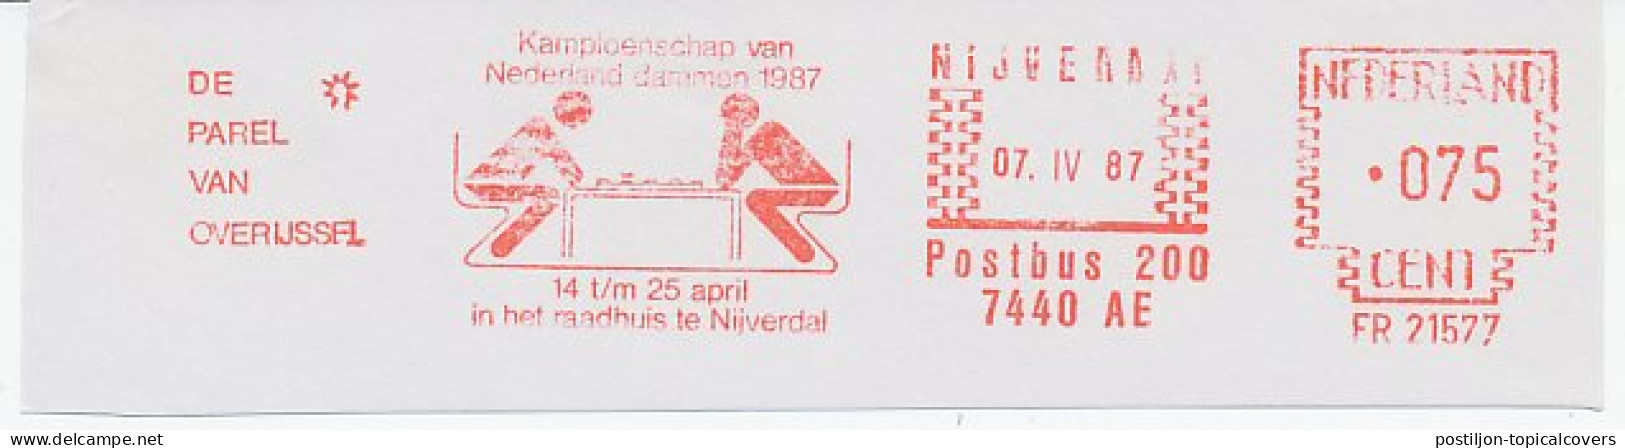 Meter Cut Netherlands 1987 Draughts - Dutch Championship 1987 - Zonder Classificatie